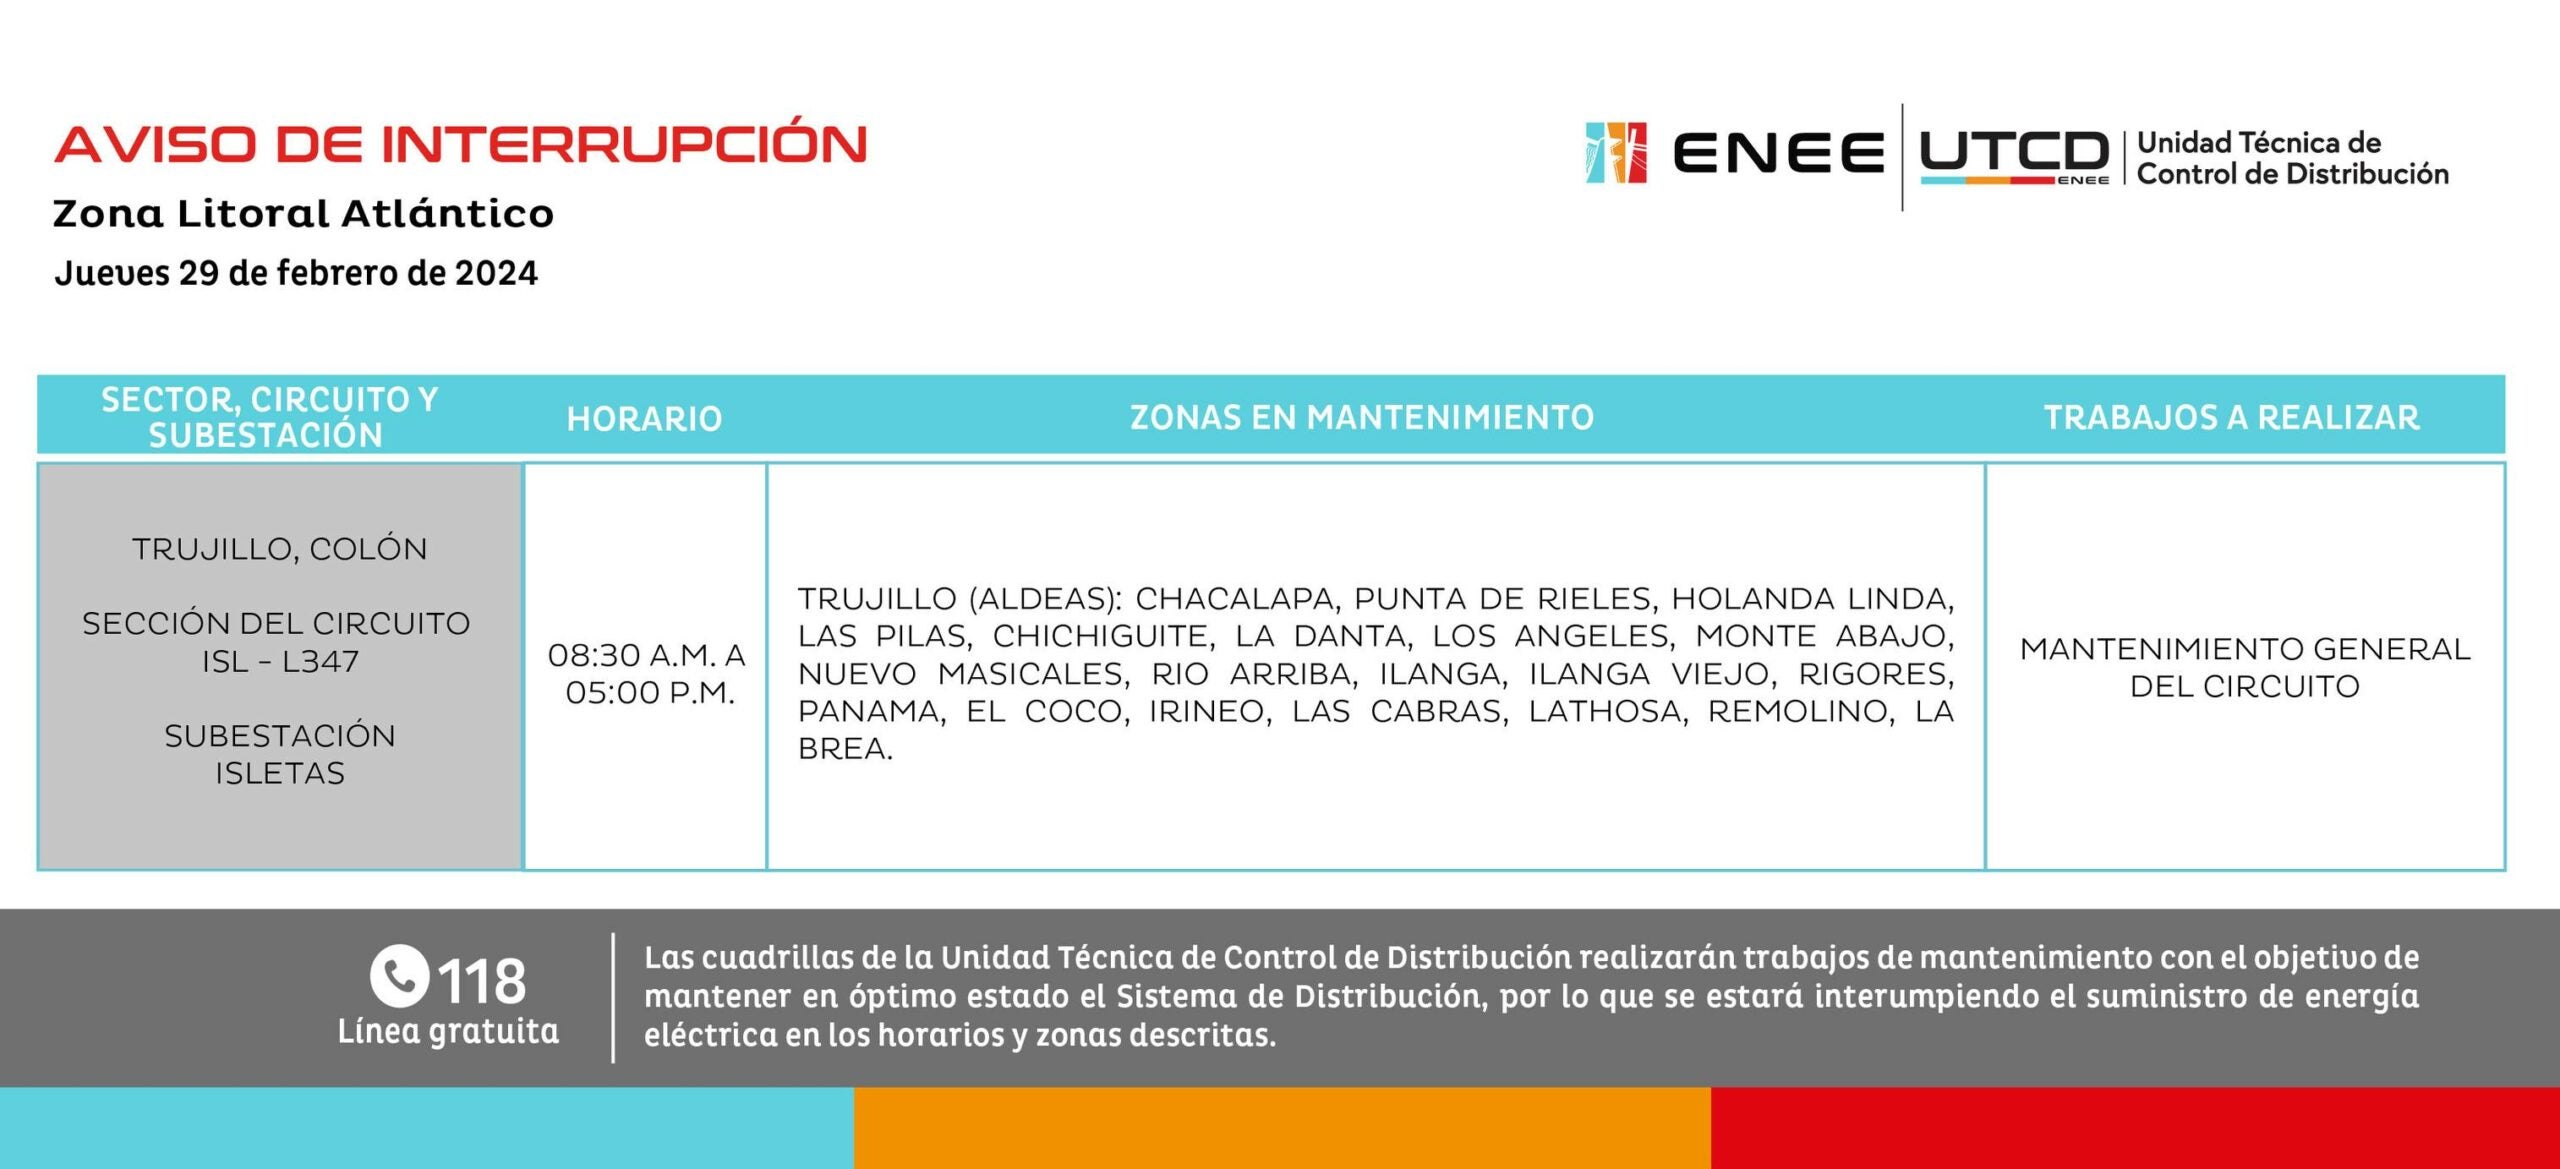 Jueves | Programan cortes de energía en Tegucigalpa, SPS, Olancho y otras partes de Honduras 